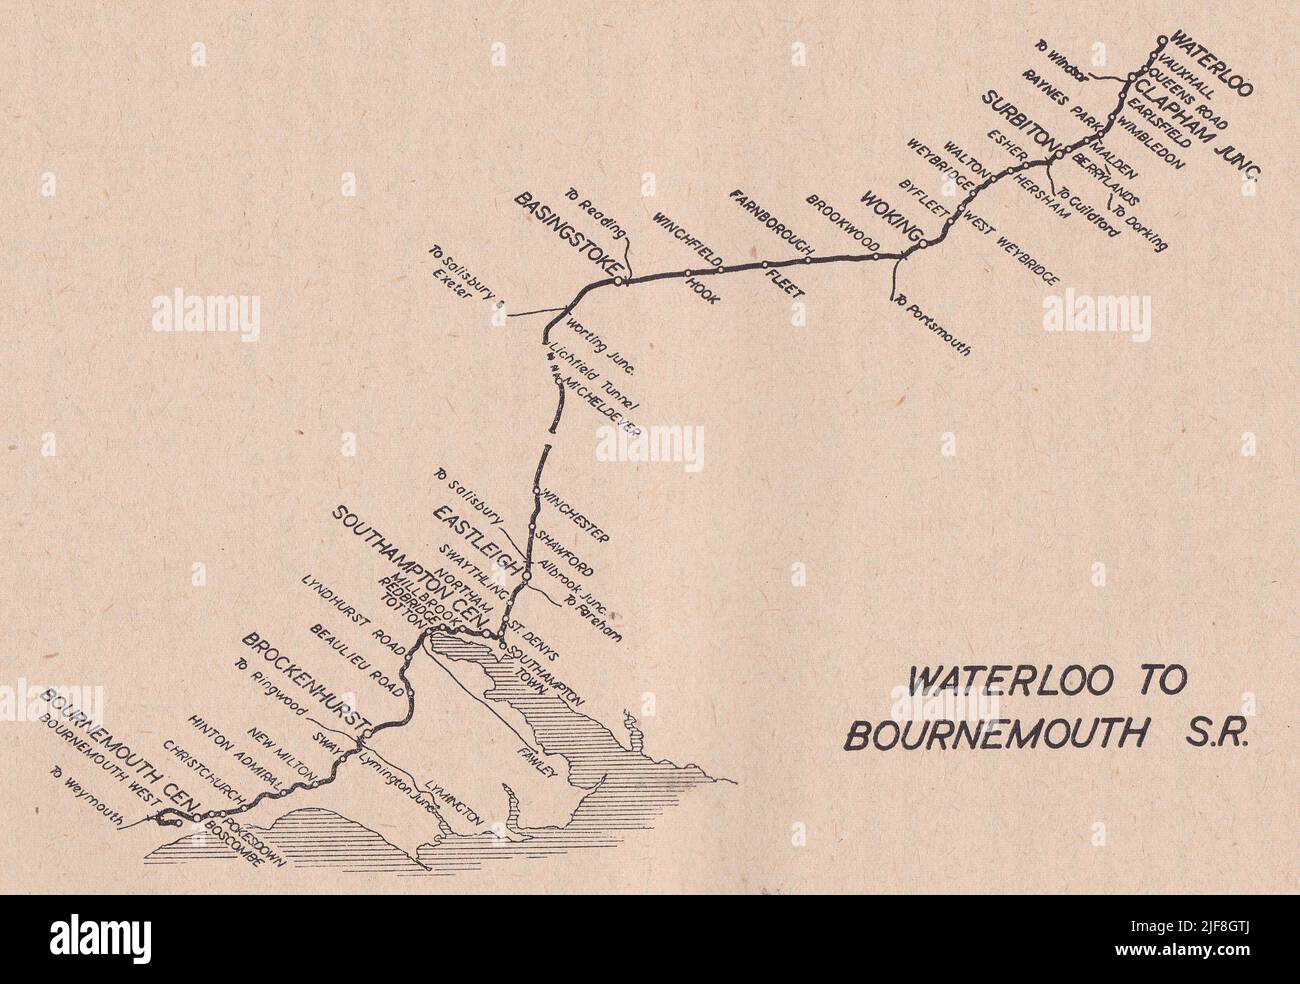 Vintage railway map - Waterloo to Bournemough S. R. Stock Photo